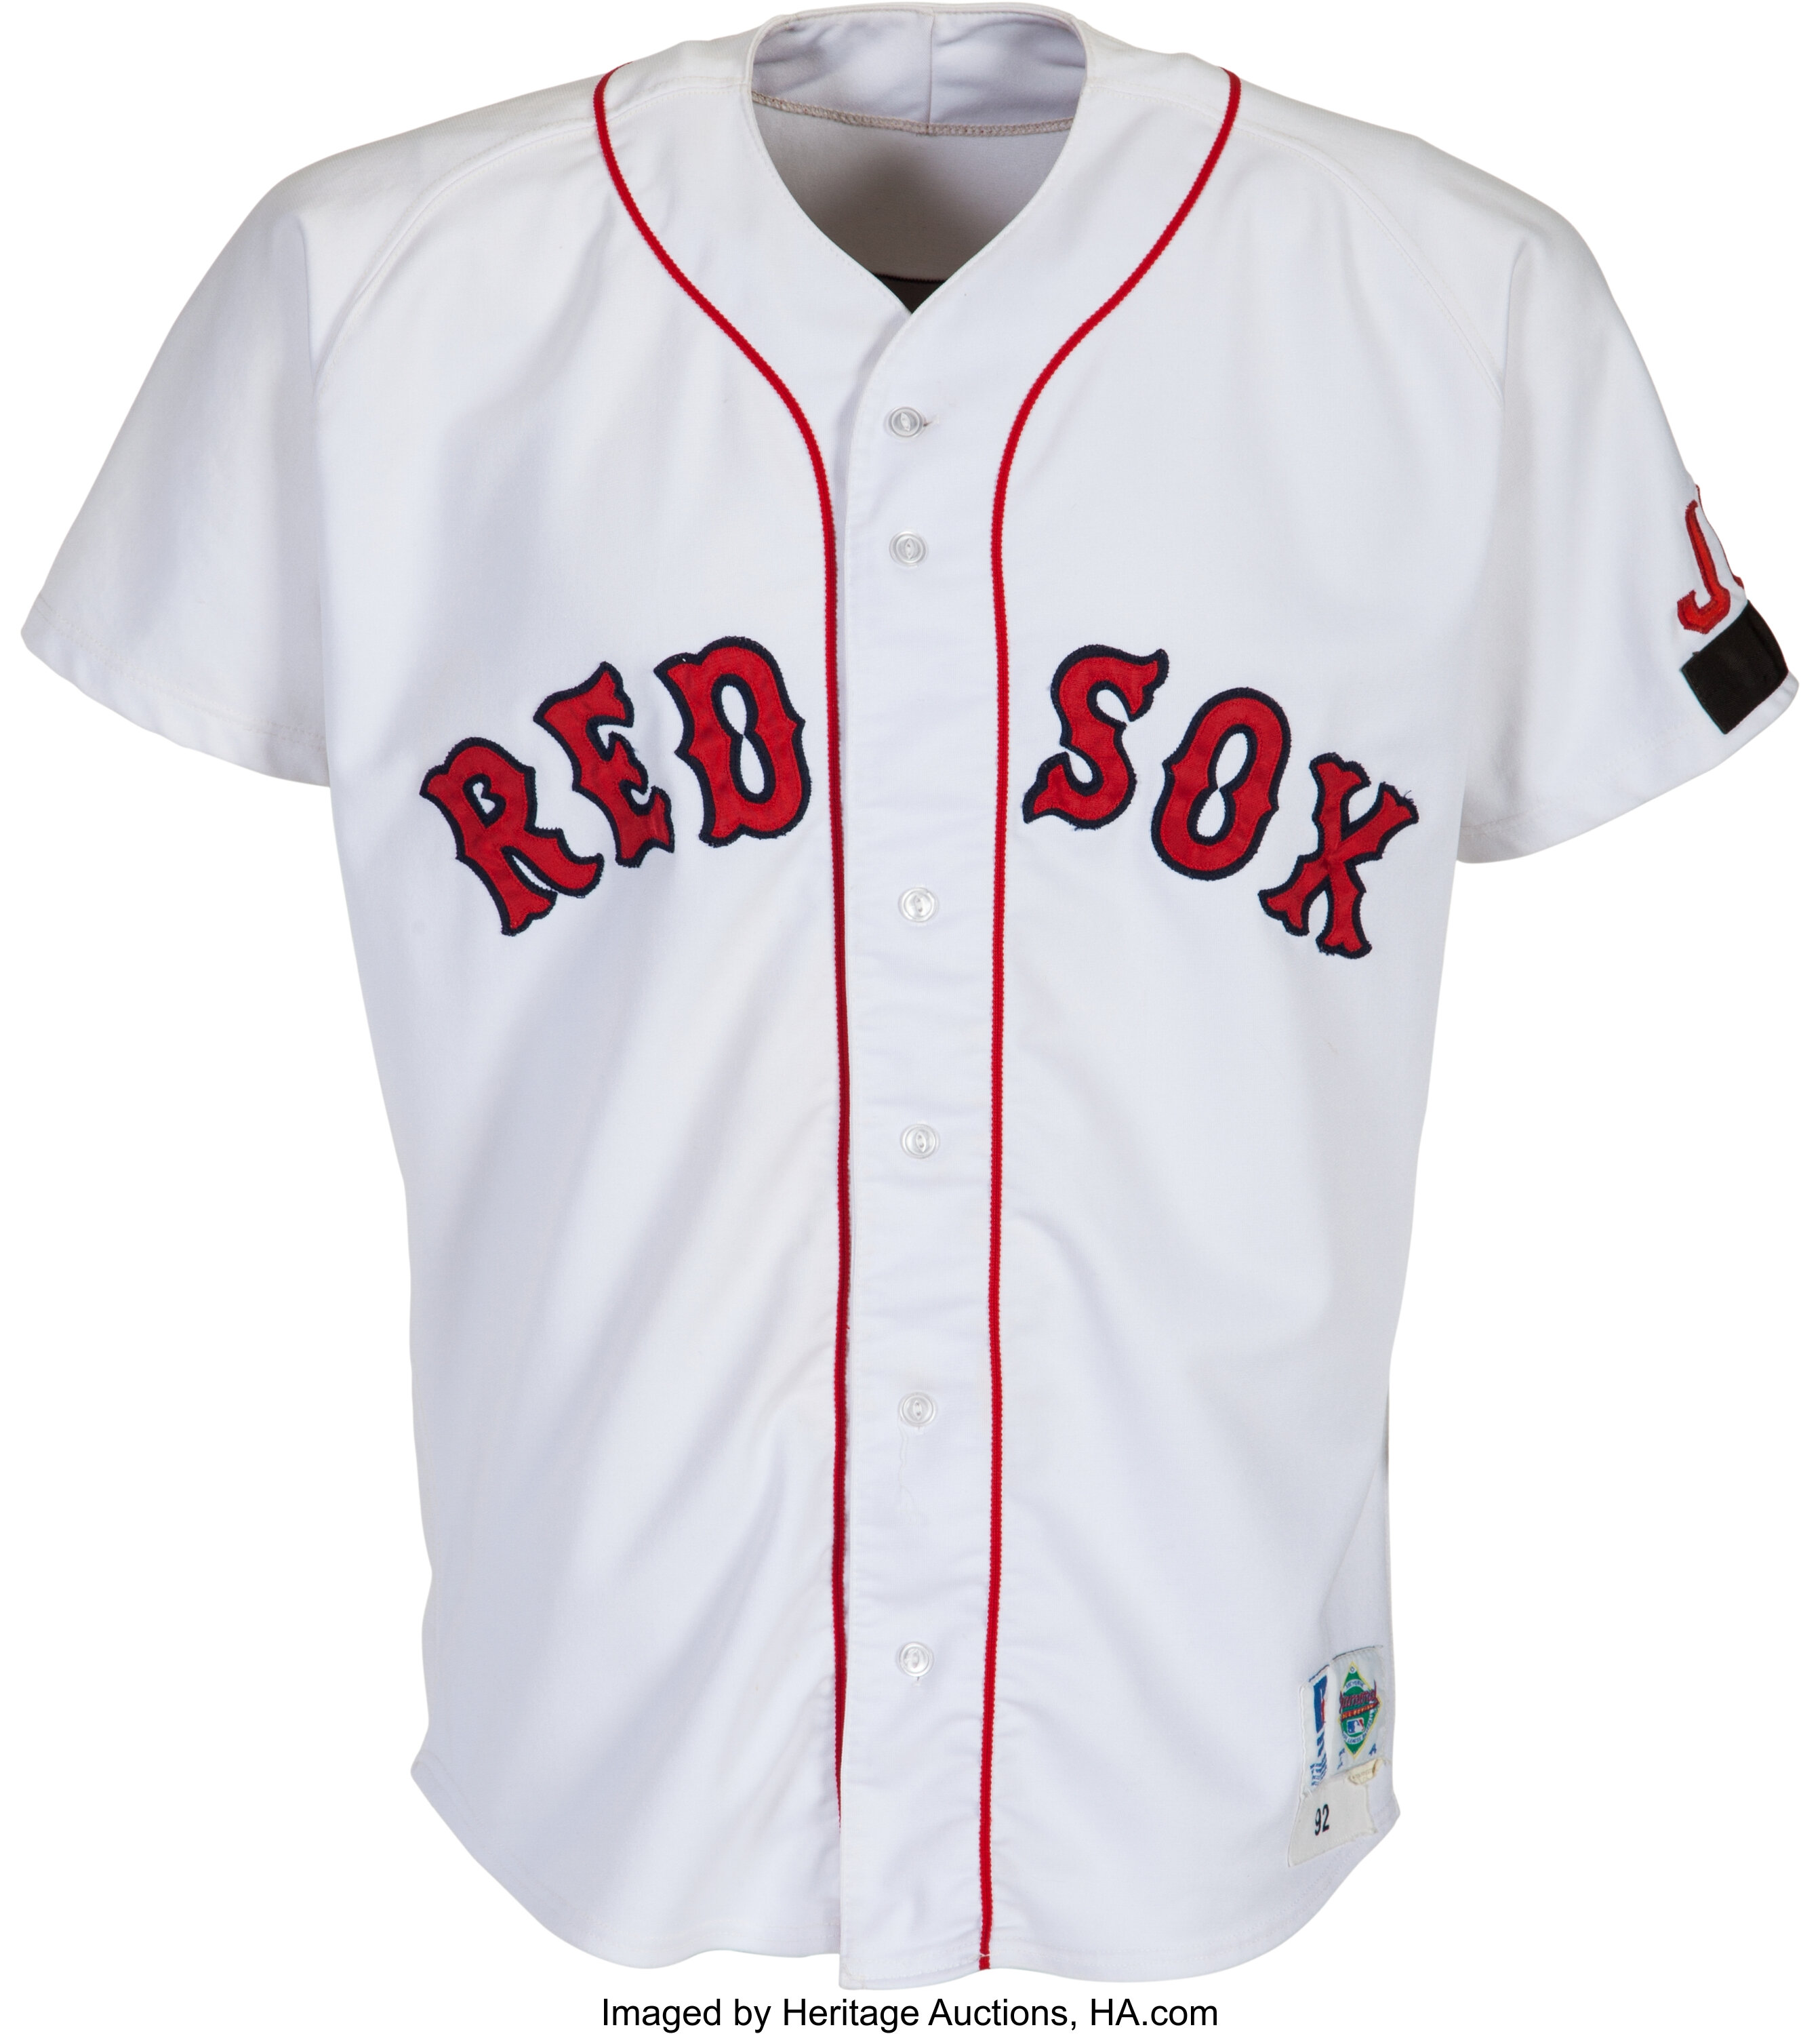 Boston Red Sox™ Uniform 3 pc.